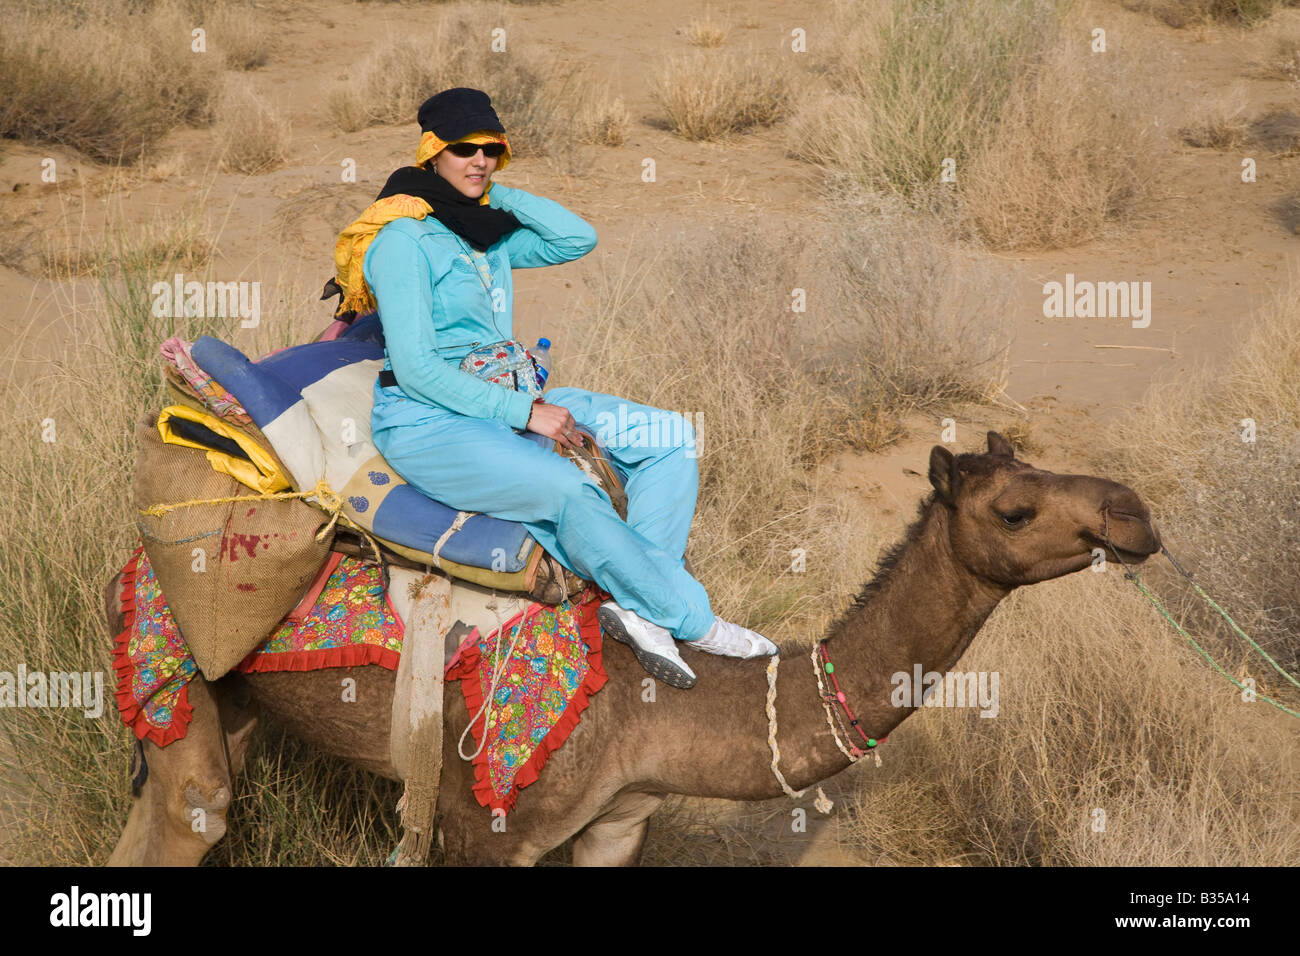 A FRENCH WOMAN rides a CAMEL in the THAR DESERT during a SAFARI near JAISALMER RAJASTHAN INDIA MR Stock Photo